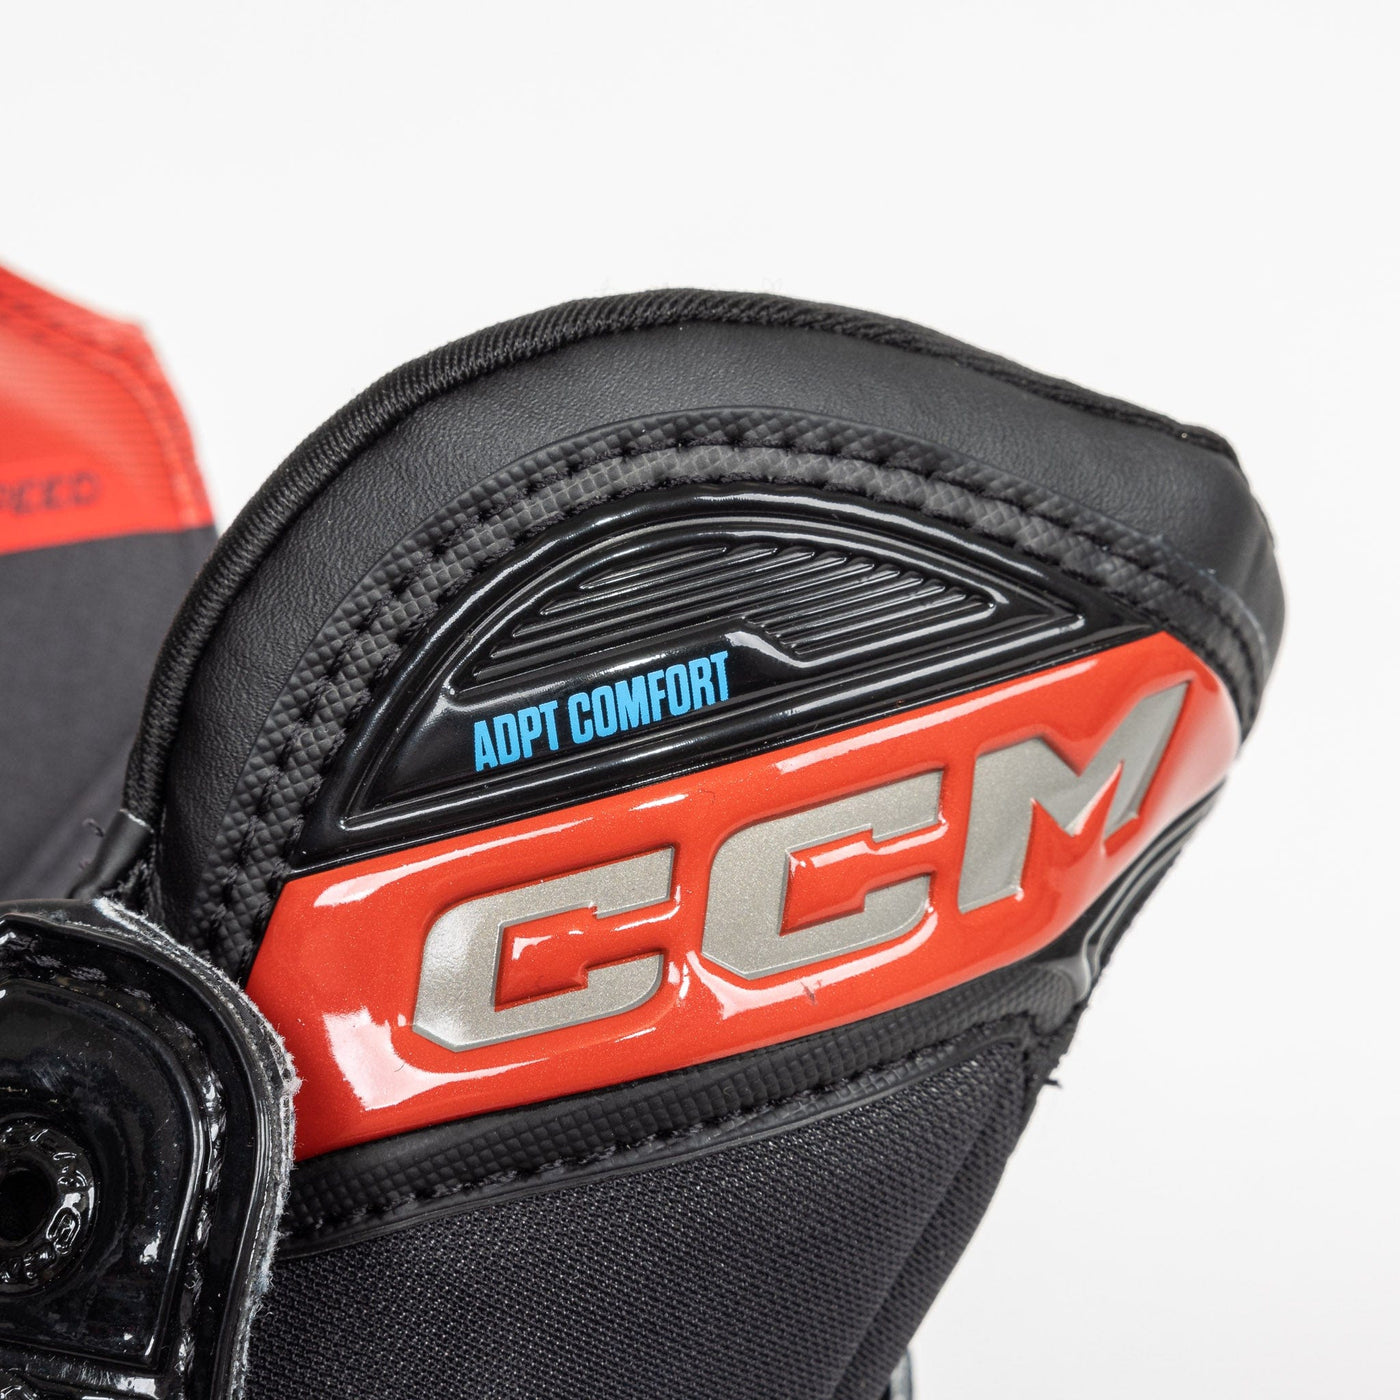 CCM Jetspeed FT6 Intermediate Hockey Skates - The Hockey Shop Source For Sports